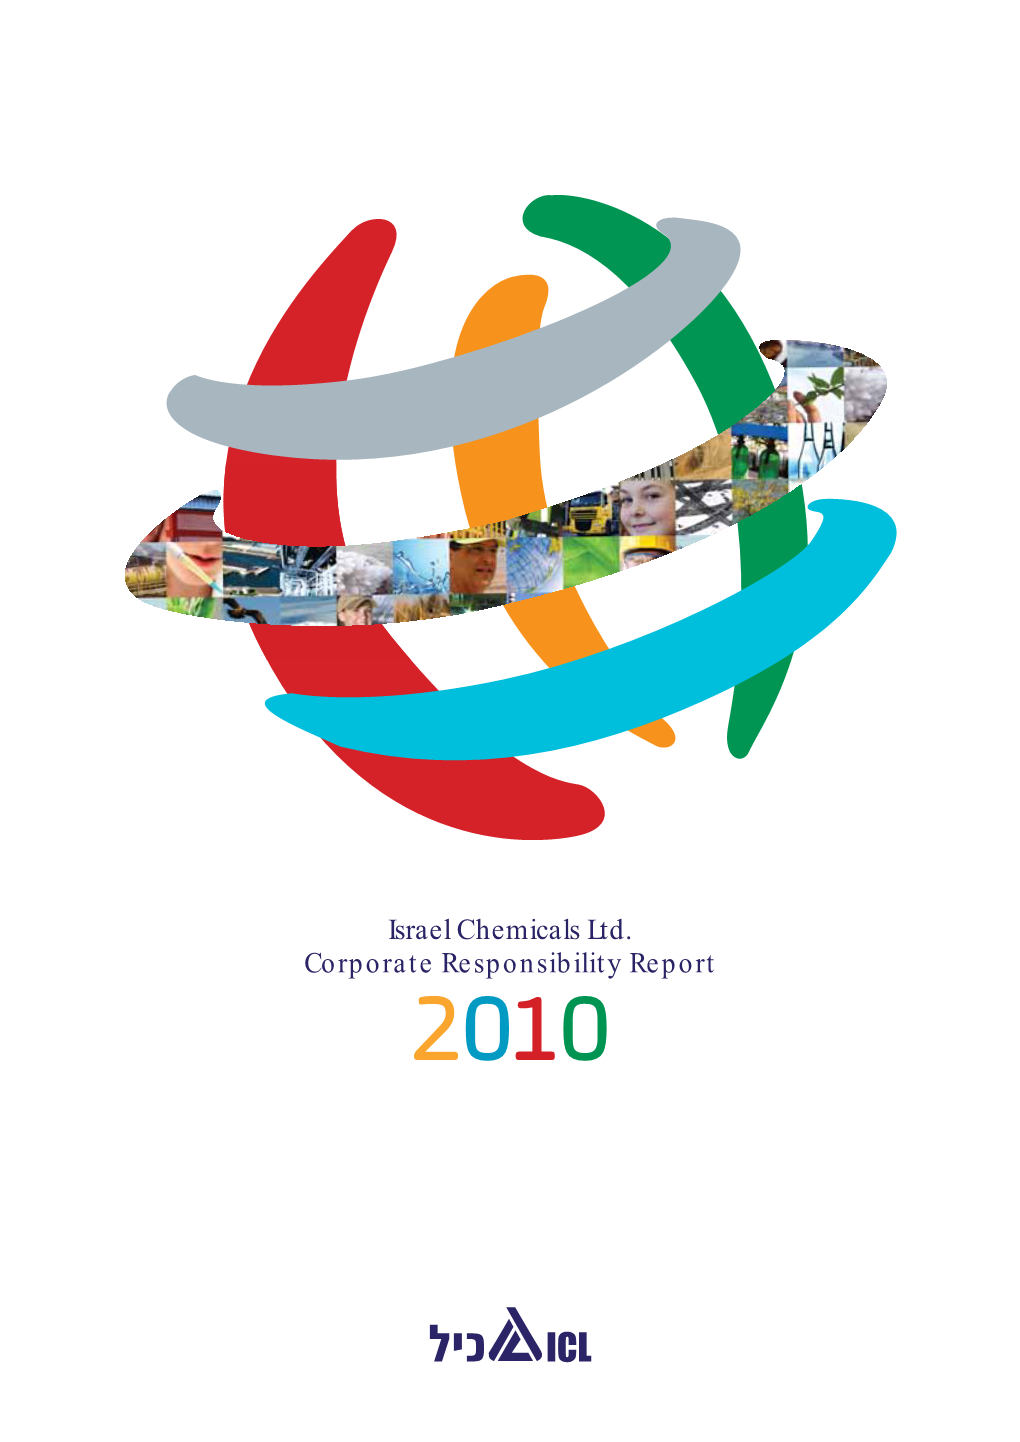 Israel Chemicals Ltd. Corporate Responsibility Report